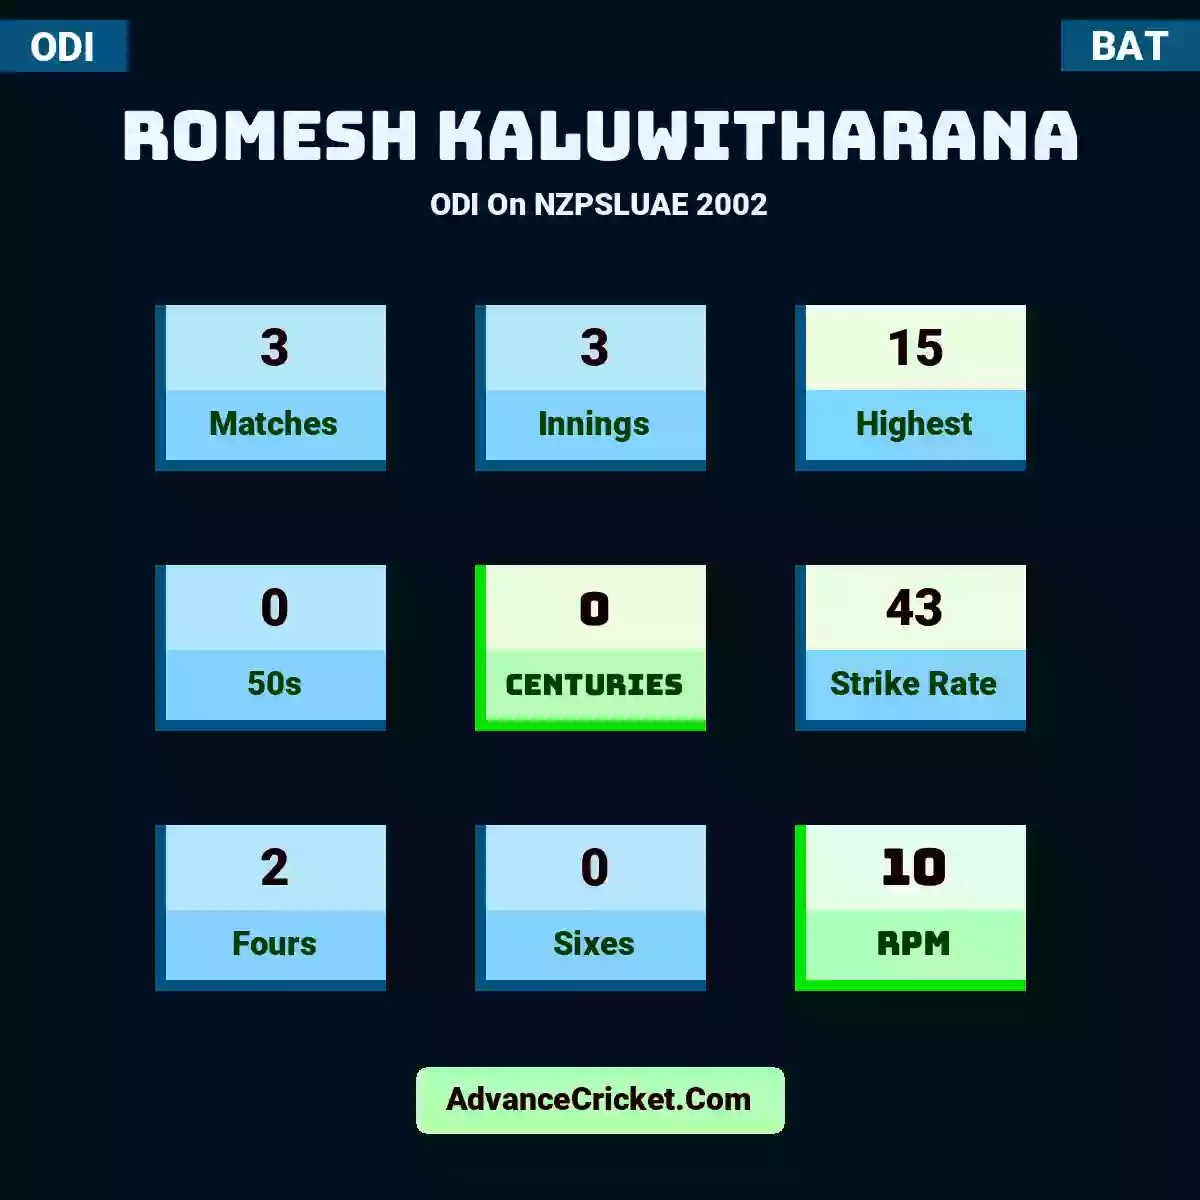 Romesh Kaluwitharana ODI  On NZPSLUAE 2002, Romesh Kaluwitharana played 3 matches, scored 15 runs as highest, 0 half-centuries, and 0 centuries, with a strike rate of 43. R.Kaluwitharana hit 2 fours and 0 sixes, with an RPM of 10.